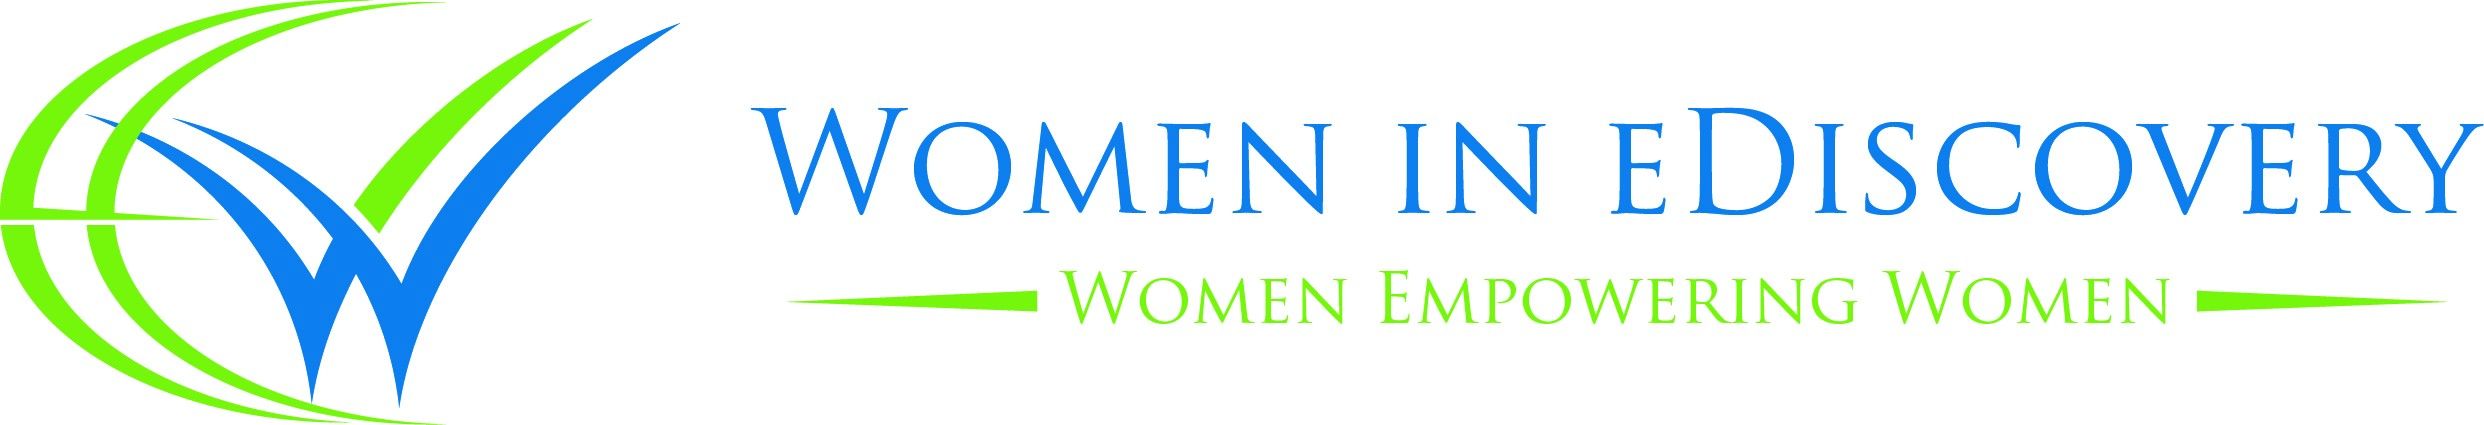 WomenineDiscovery Logo